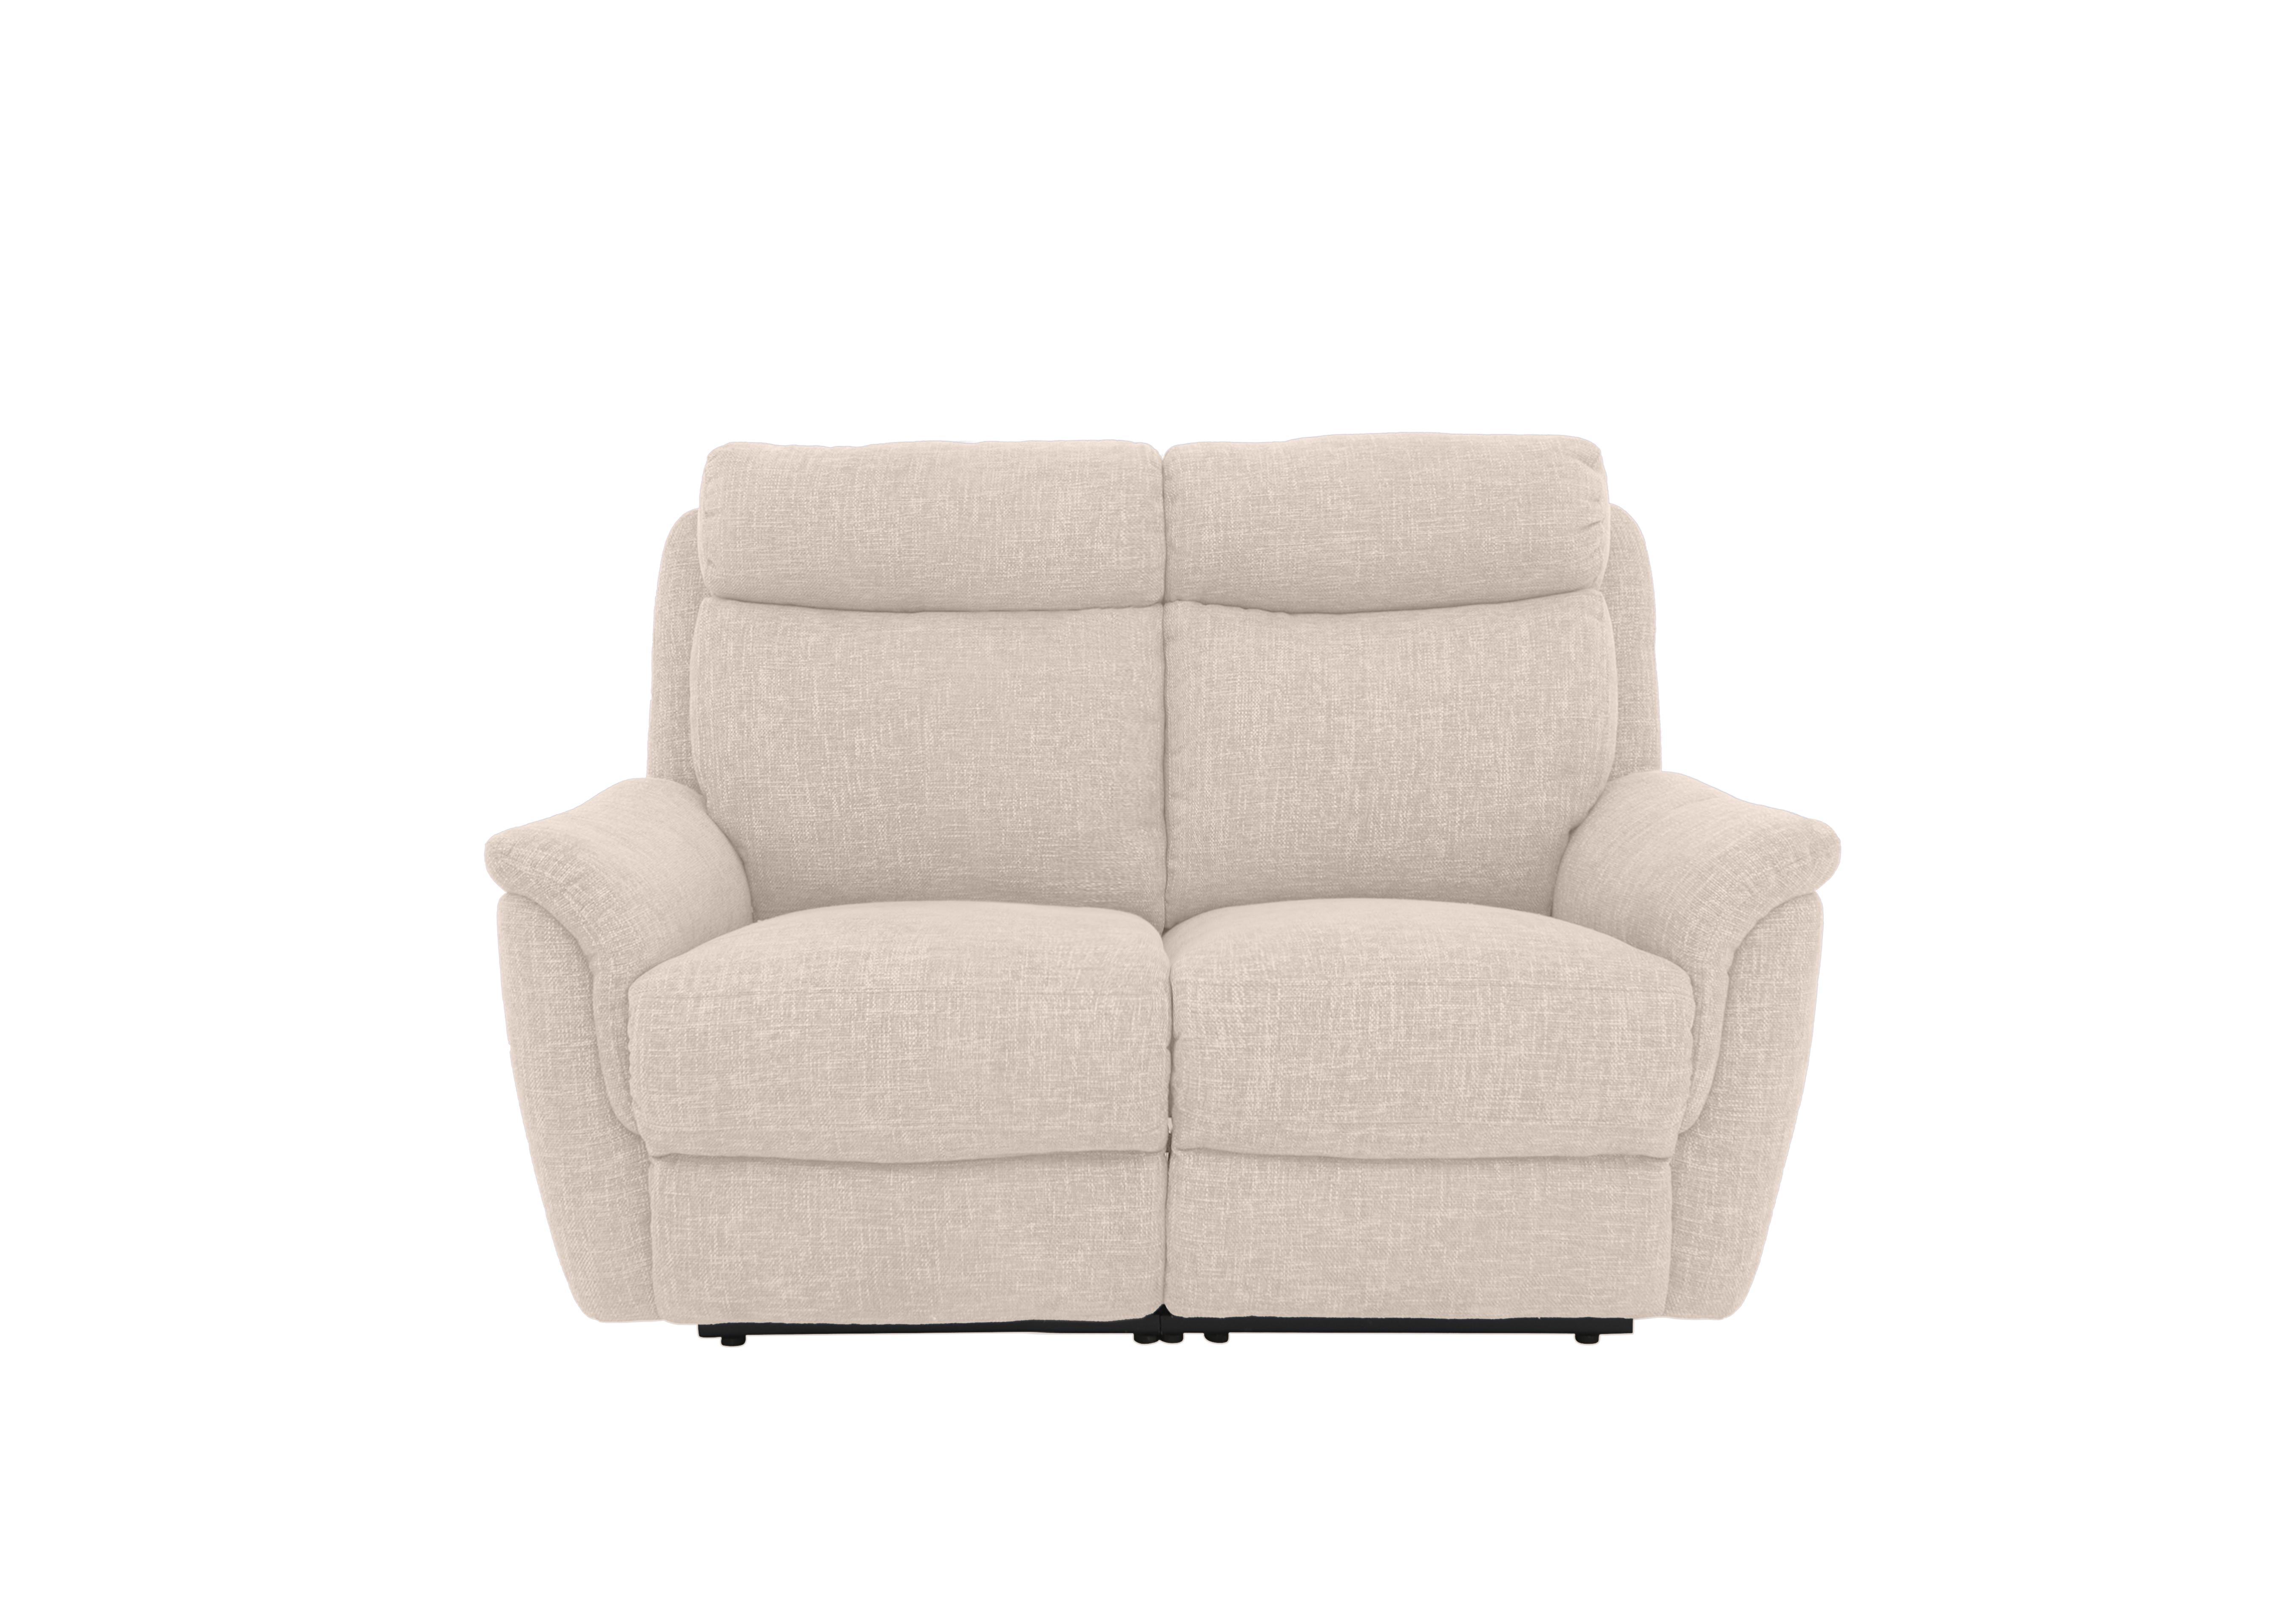 Orlando 2 Seater Fabric Sofa in Anivia Nature 13445 on Furniture Village